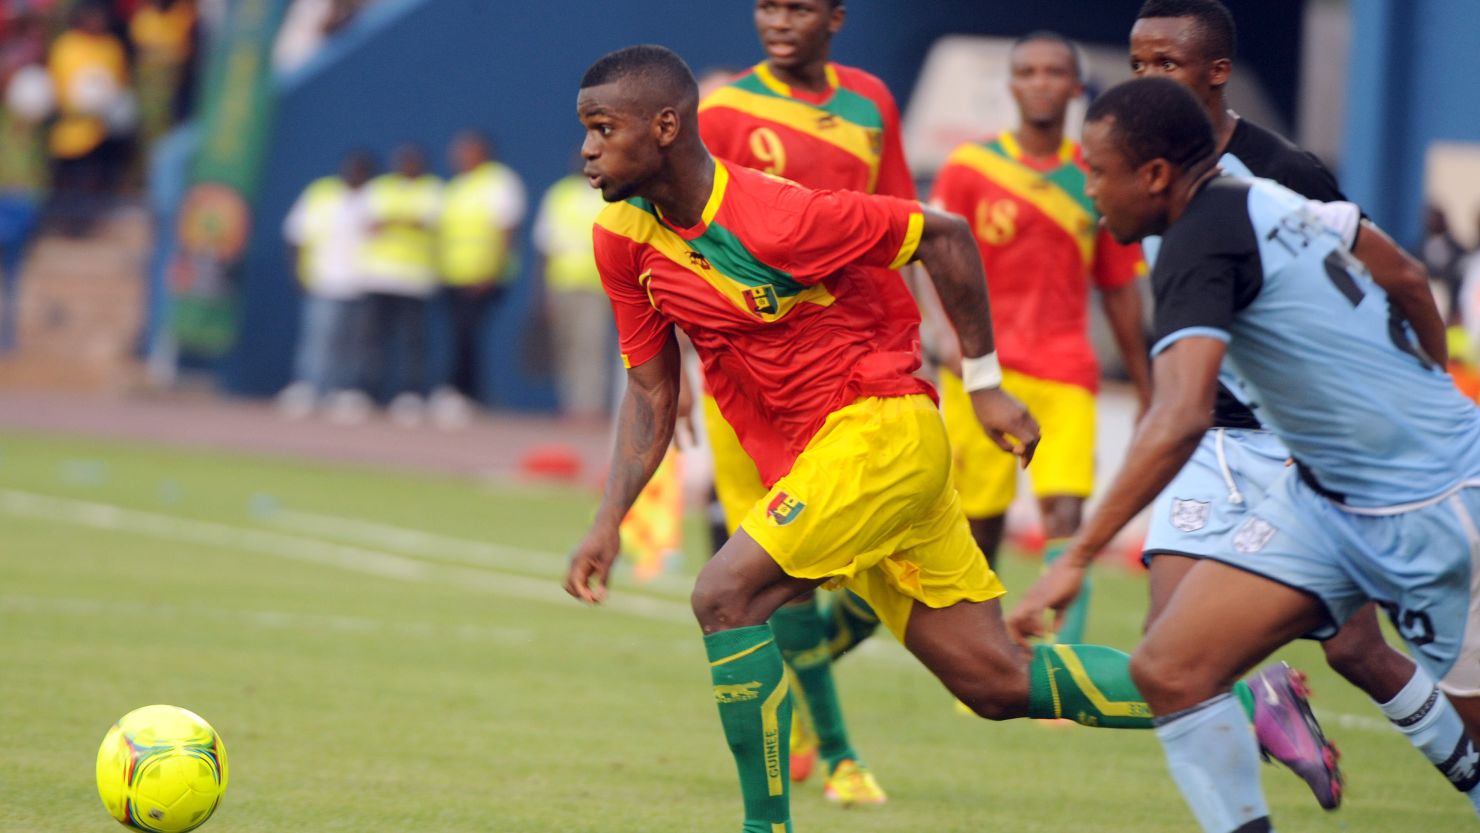 Striker Razzagui Camara (center) scored Guinea's third goal in a 6-1 thrashing of Botswana on Saturday in Franceville.